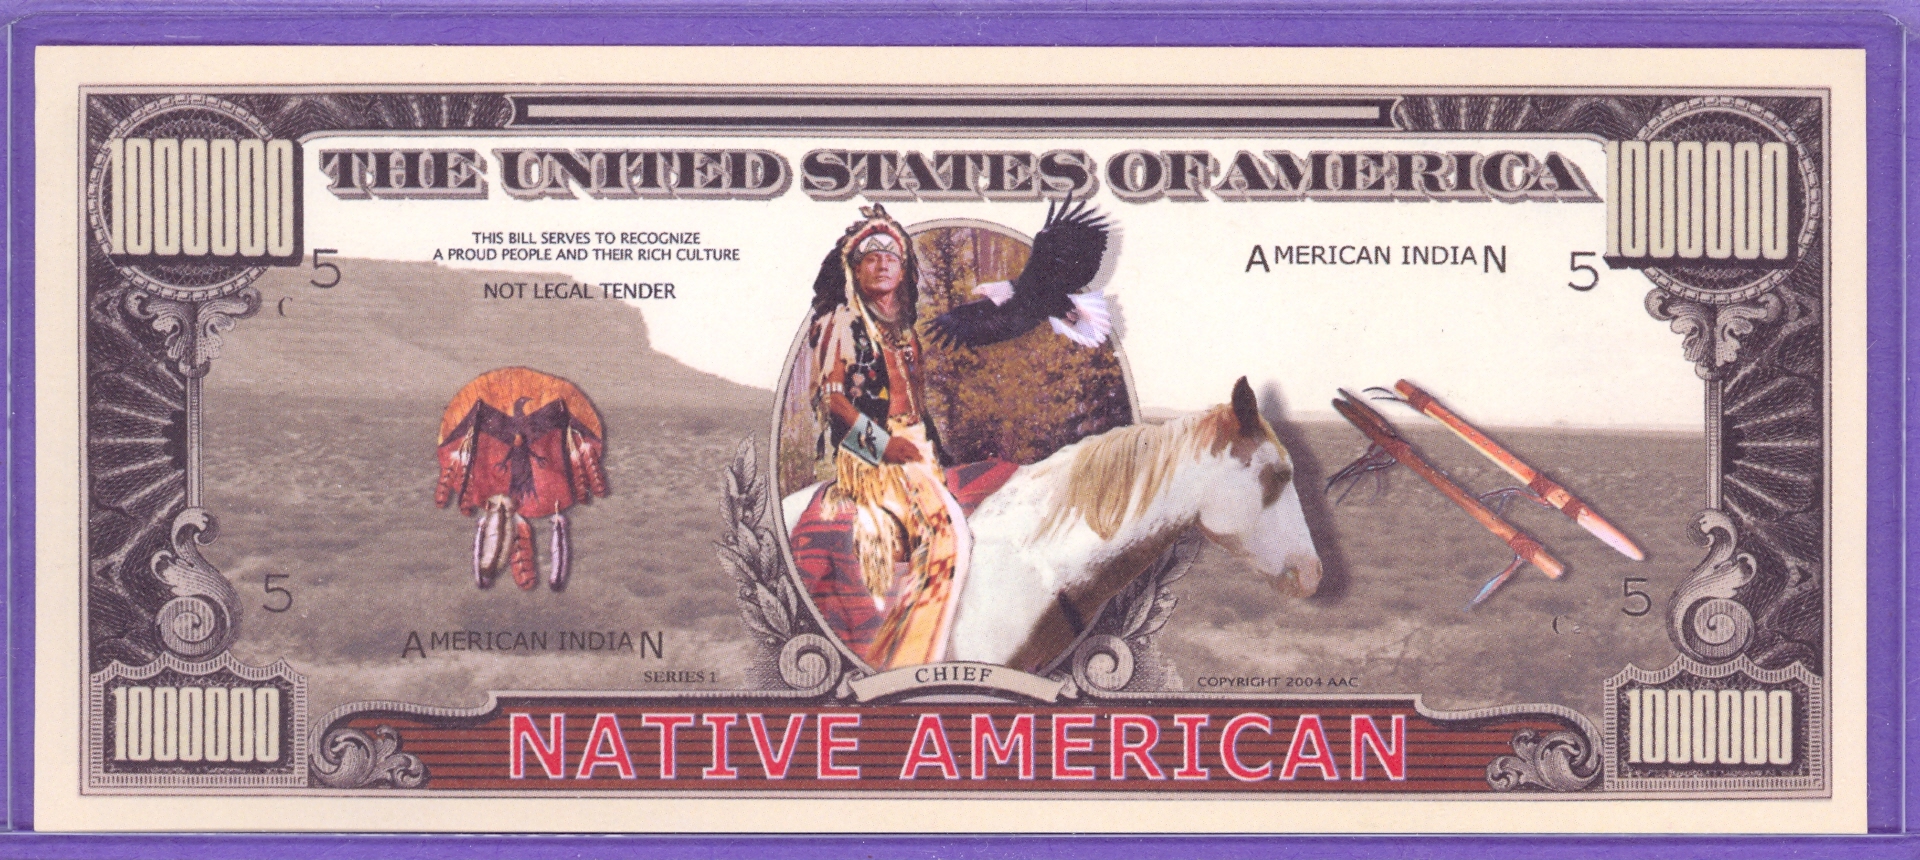 Native American $1,000,000 Novelty or Fantasy Money